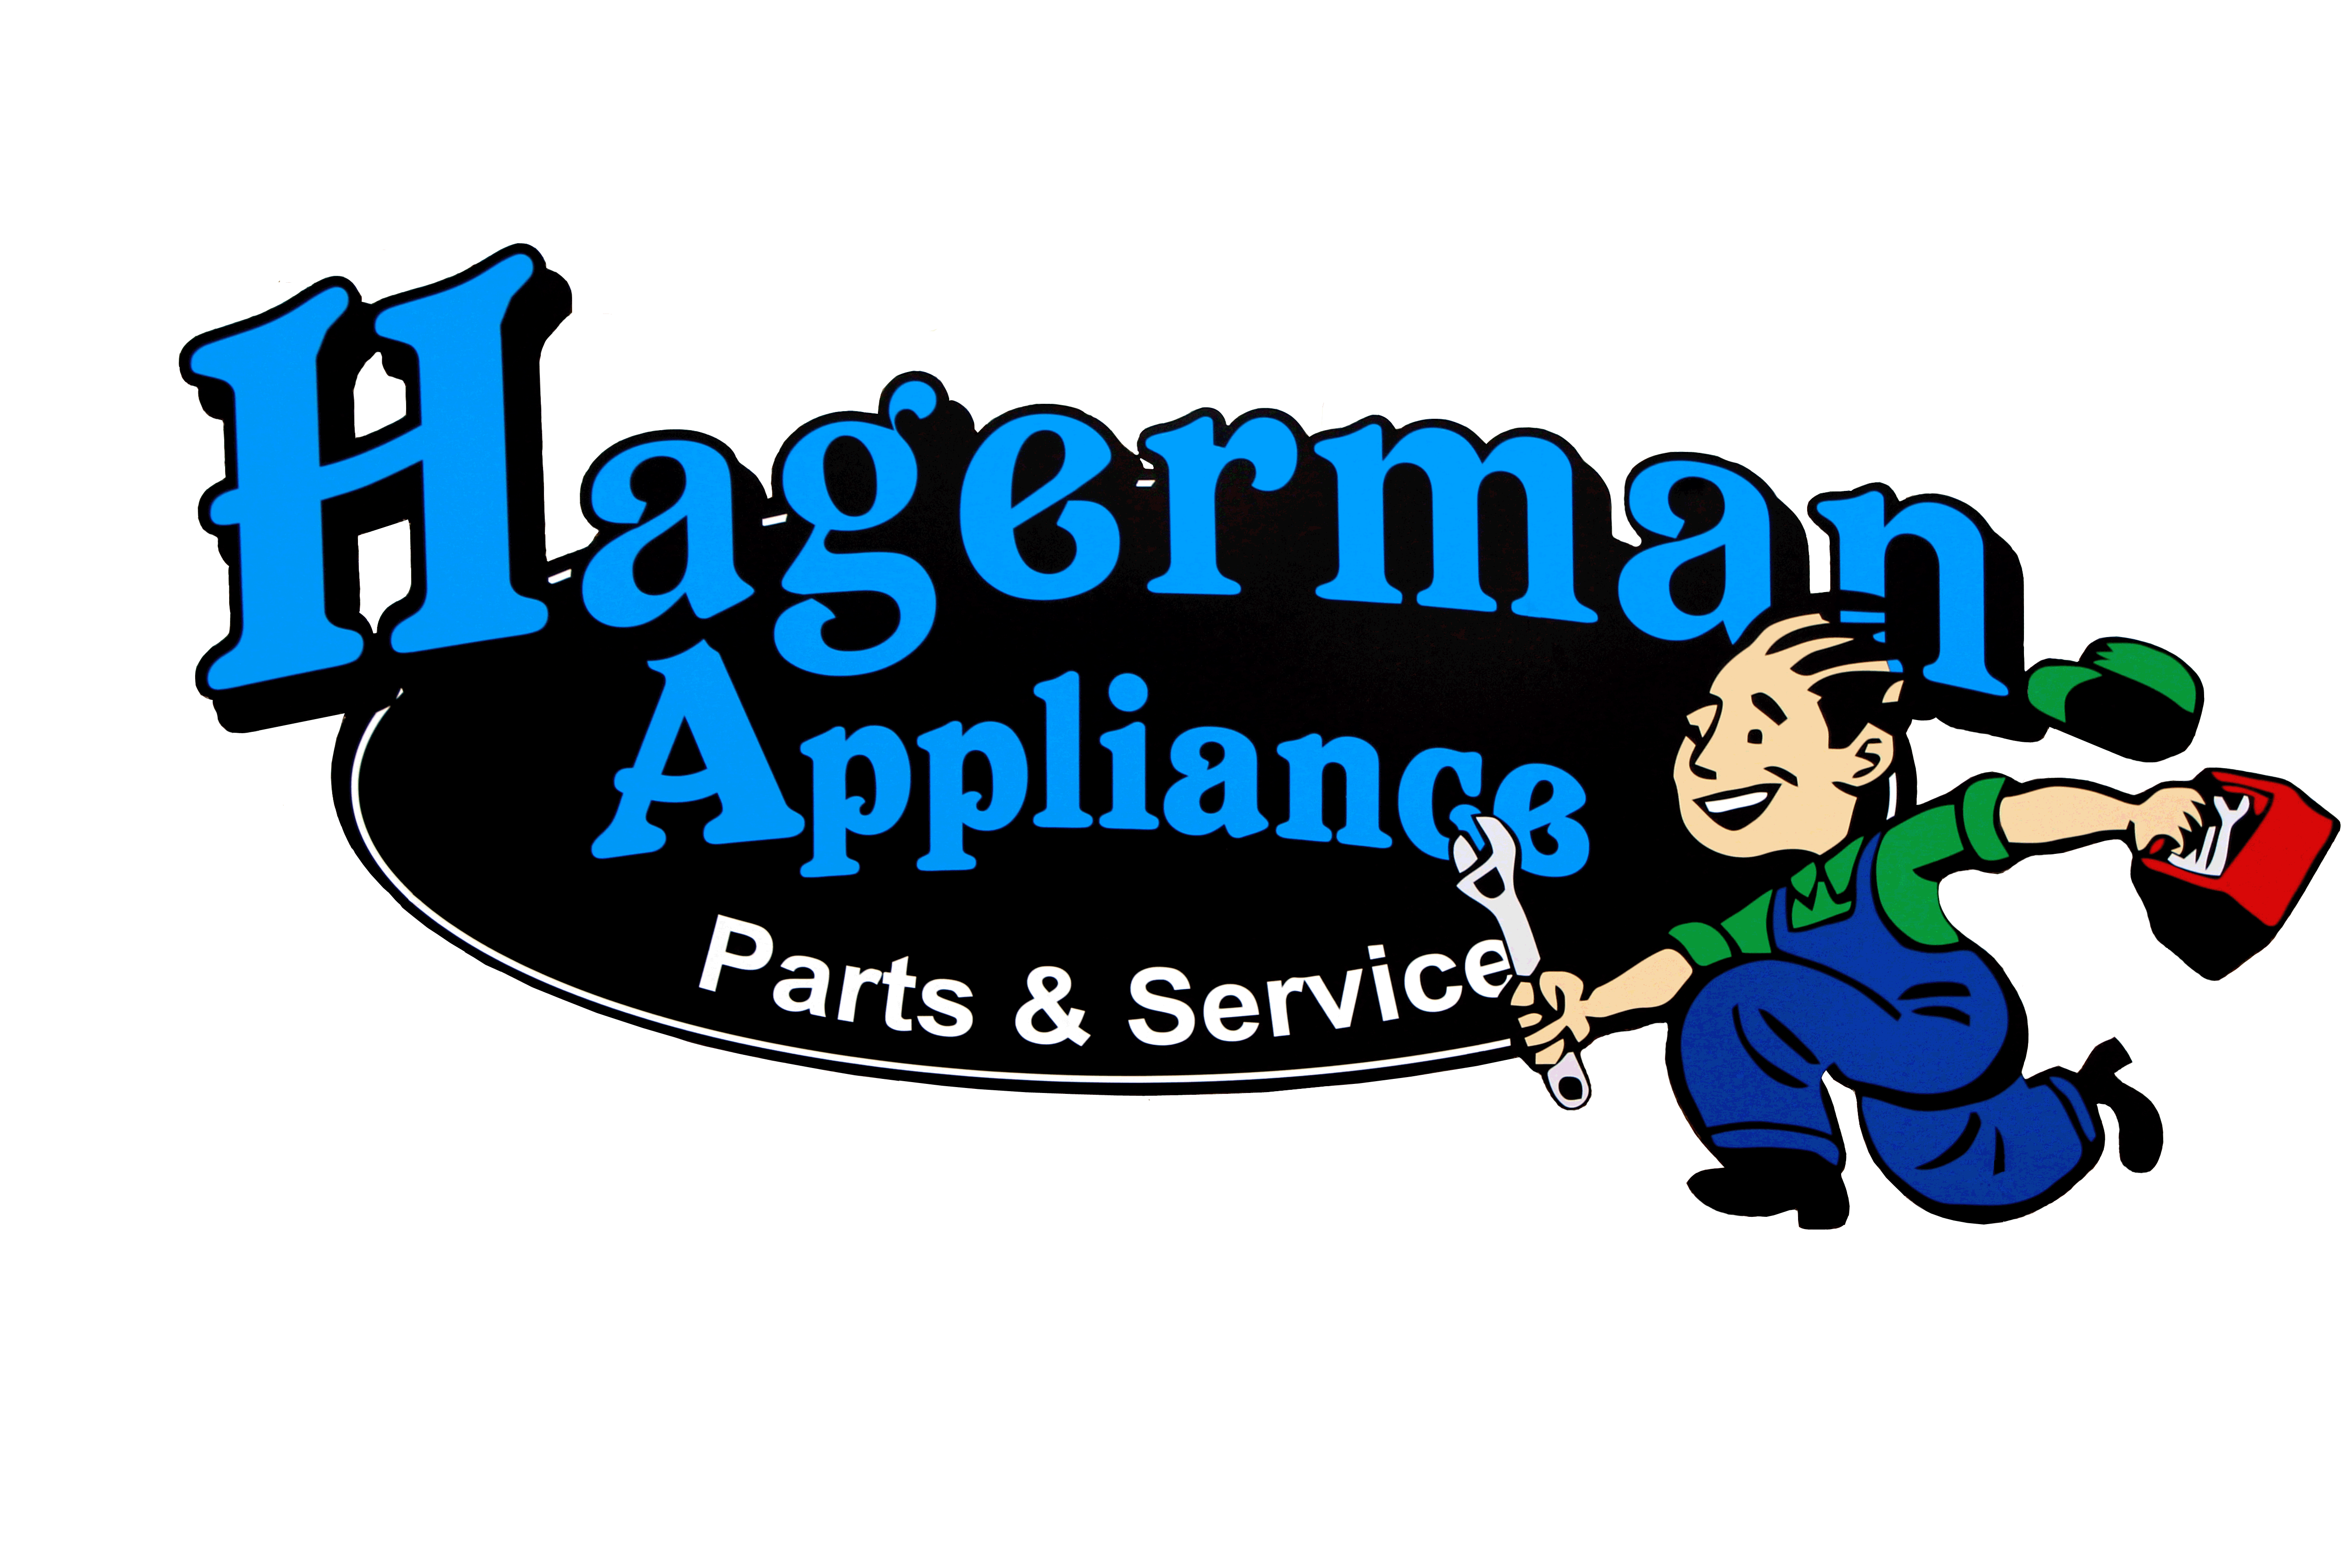 Hagerman Appliance Parts Logo